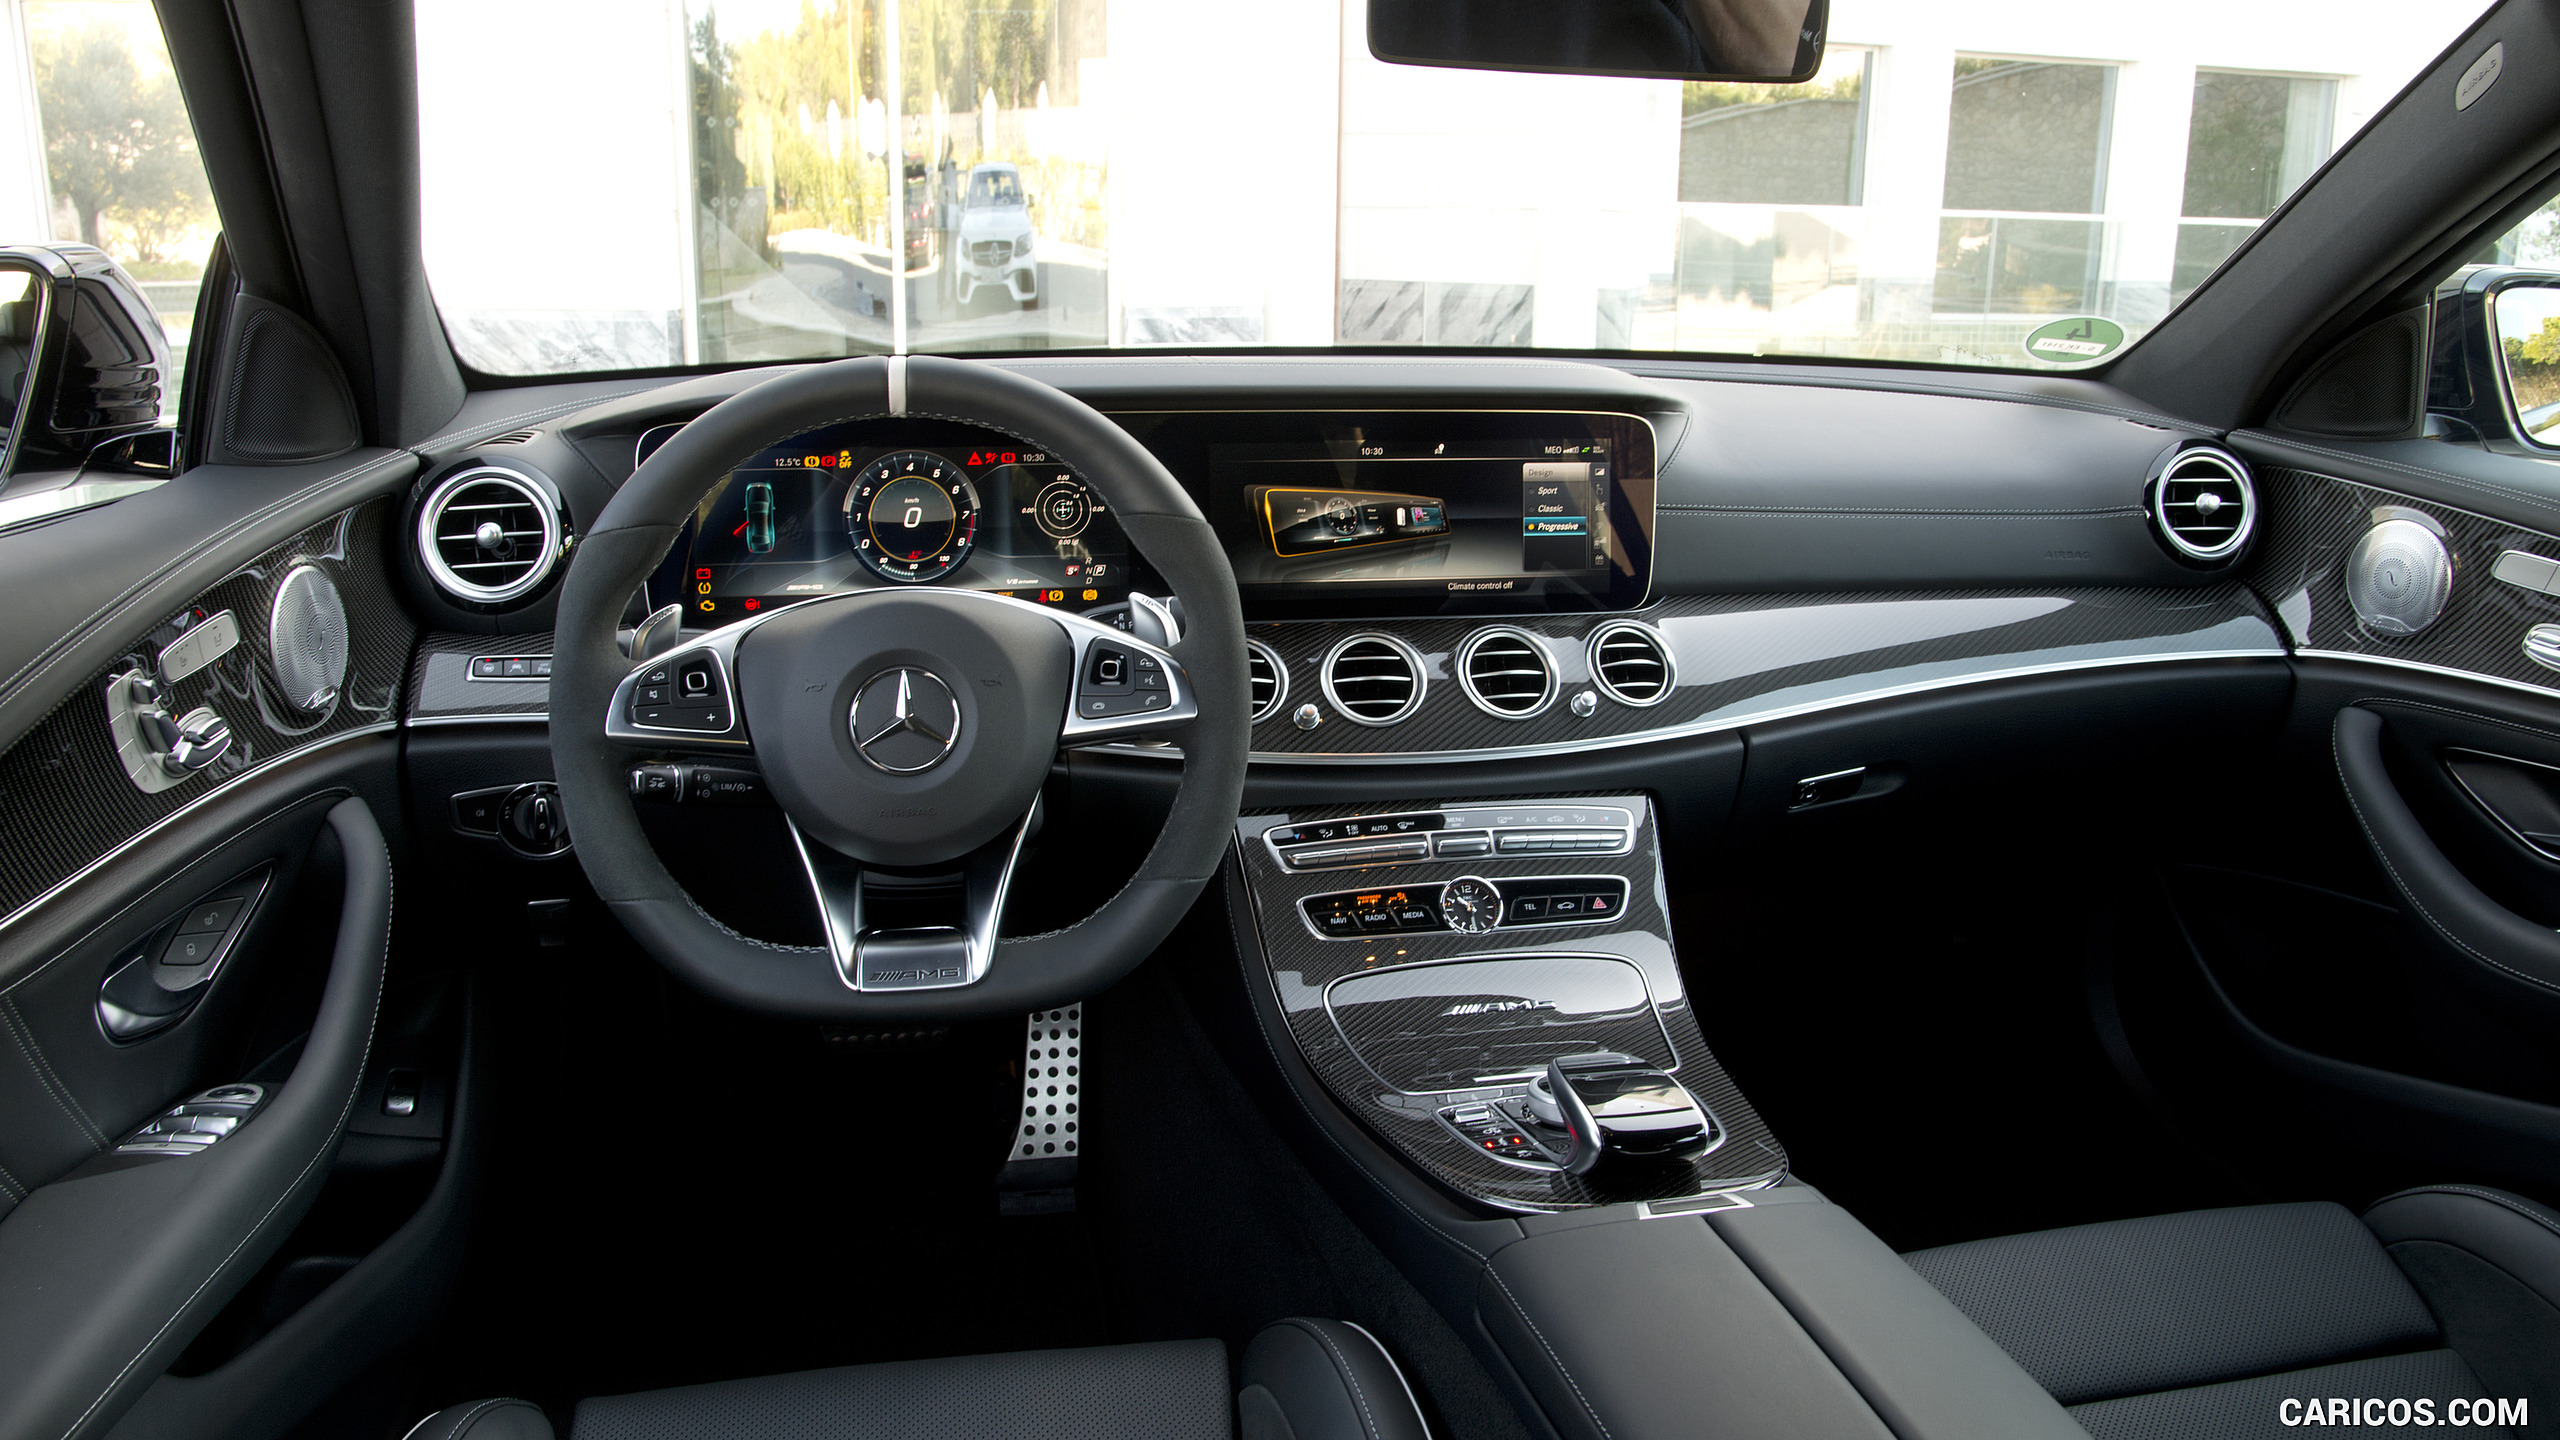 2018 Mercedes-AMG E63 S 4MATIC+ - Interior, Cockpit, #138 of 323